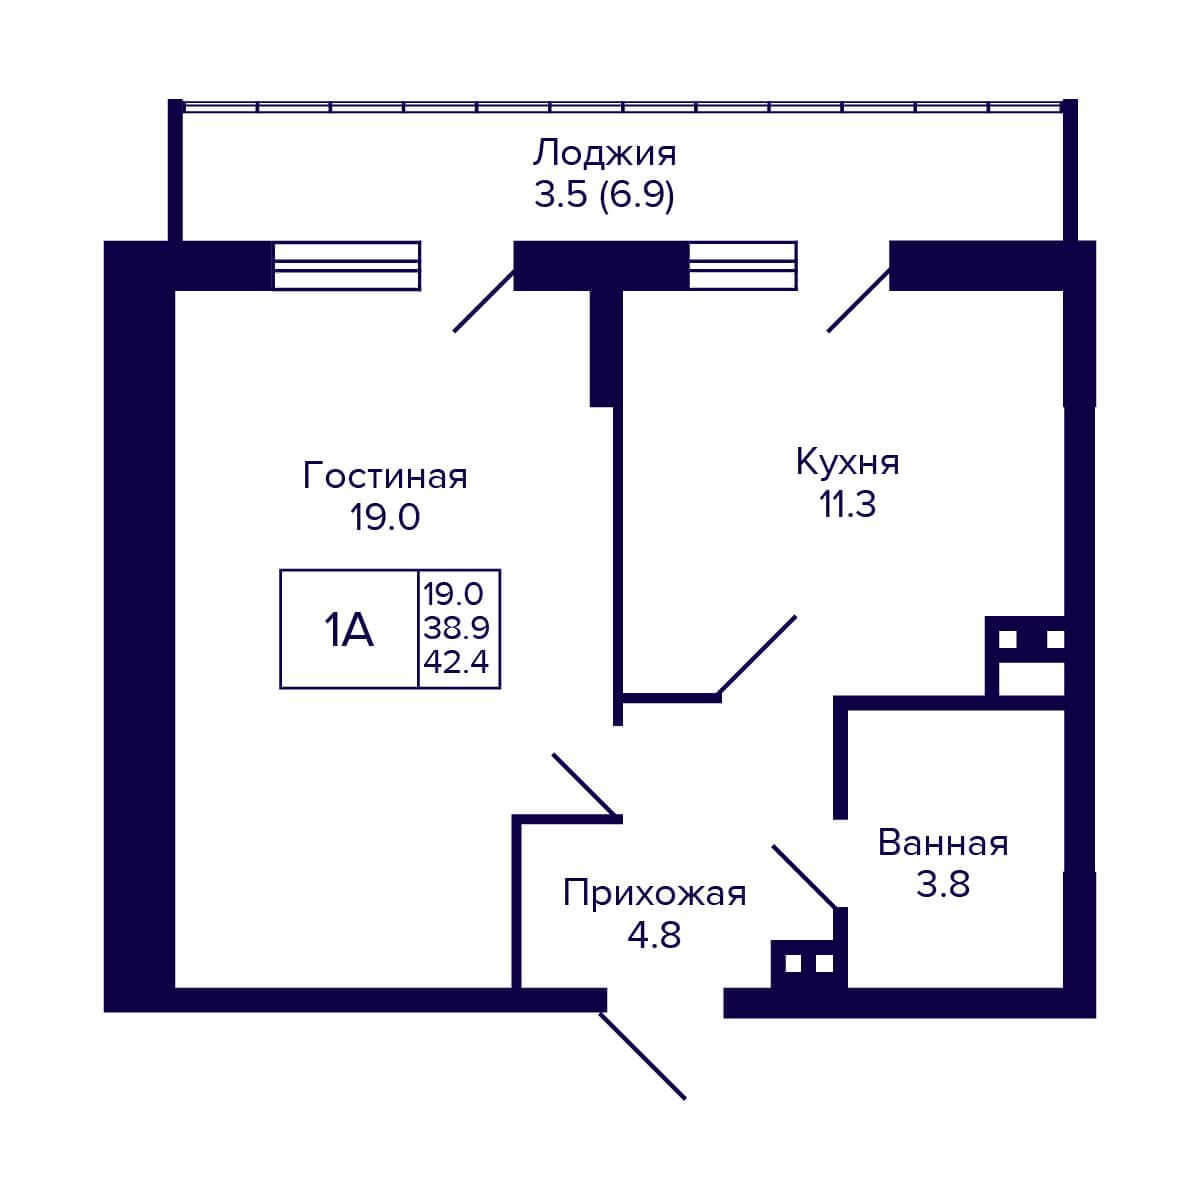 1-комнатная квартира 42.4м2 ЖК Gorizont